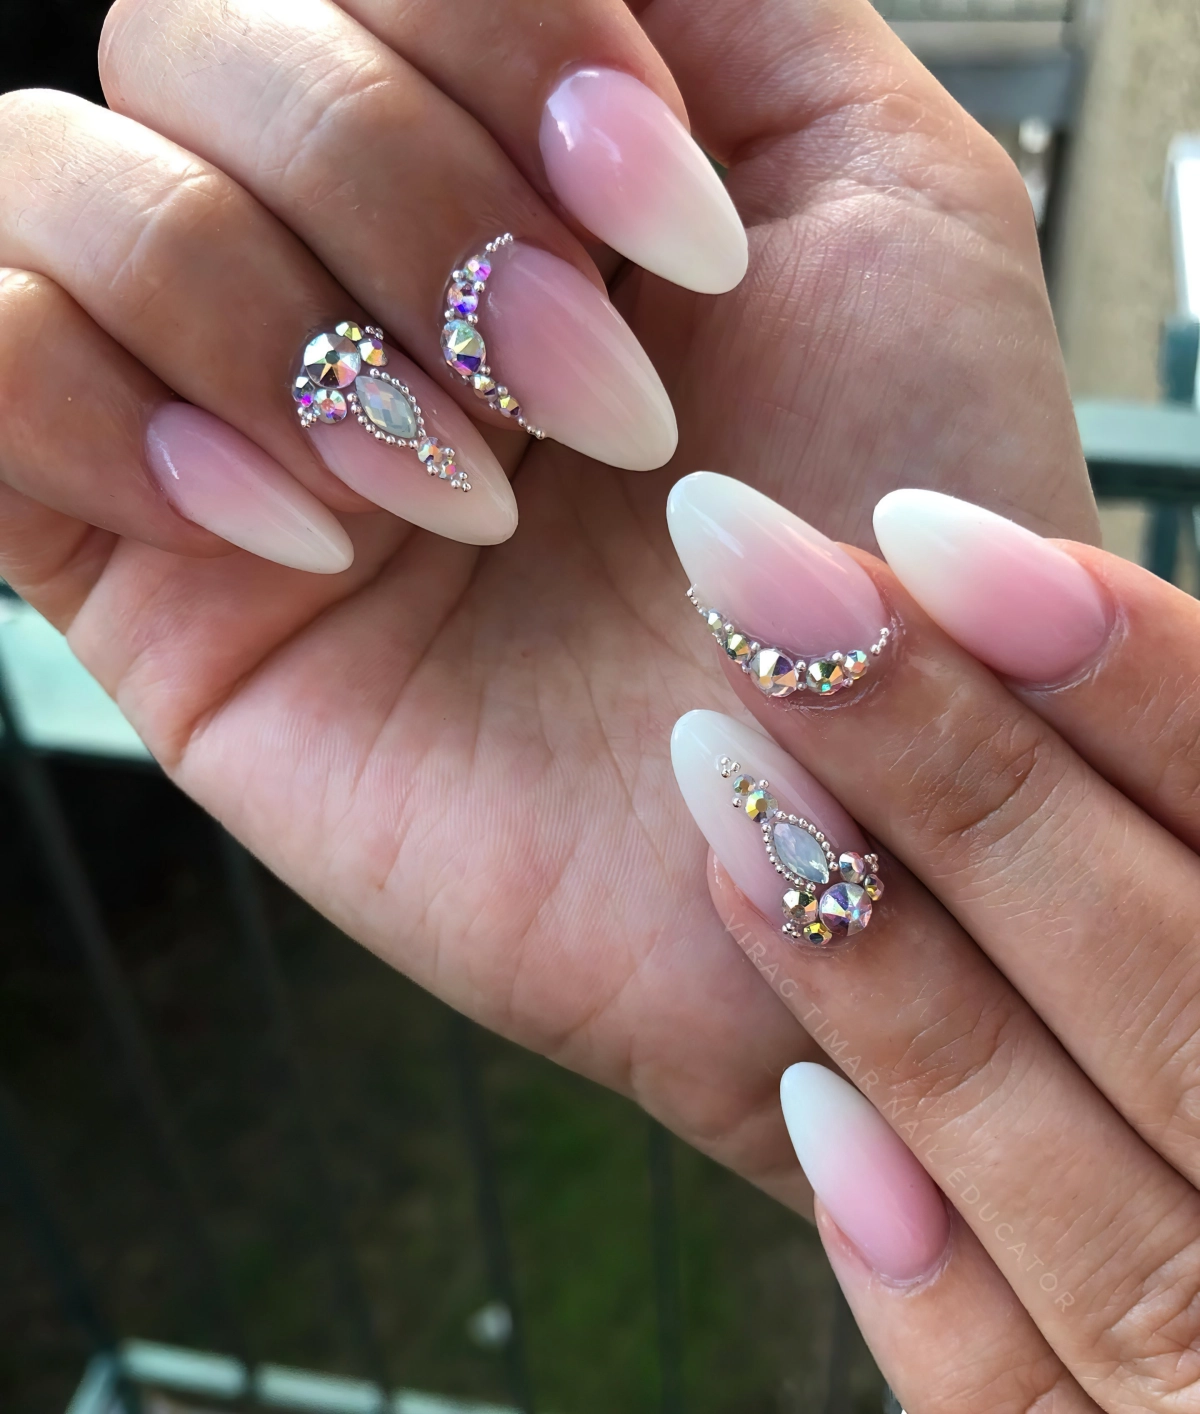 embellissement cristaux nail art ongles rose pastel vernis milky white